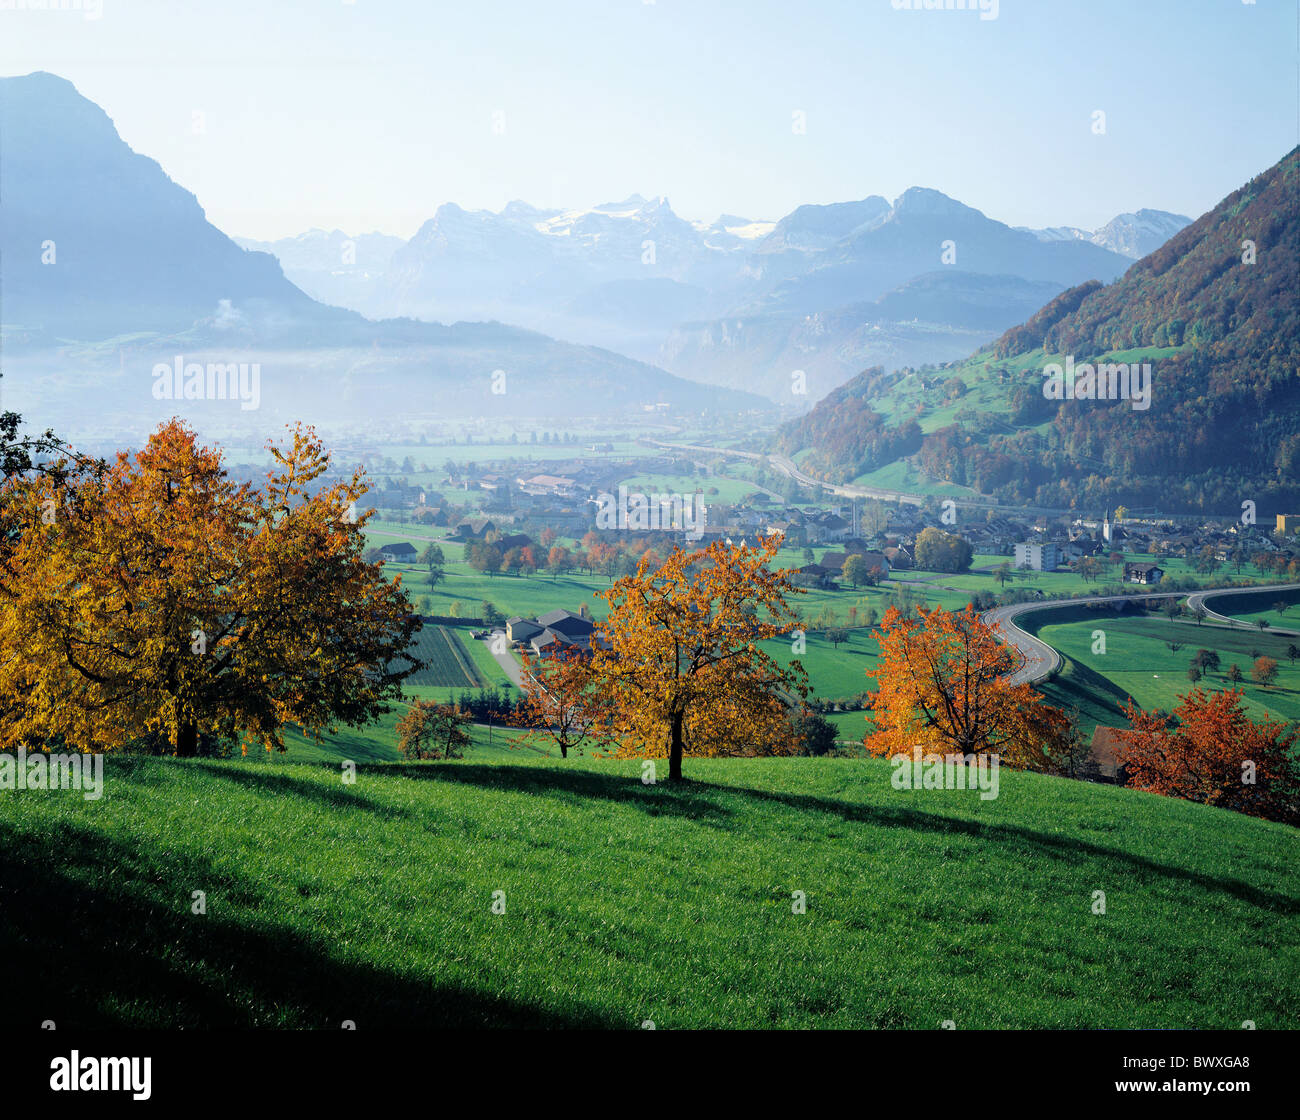 Landschaft im Herbst zentrale Schweiz Berg Panorama Berge Ibach Schweiz  Europa Schwyz Seewen vall Stockfotografie - Alamy